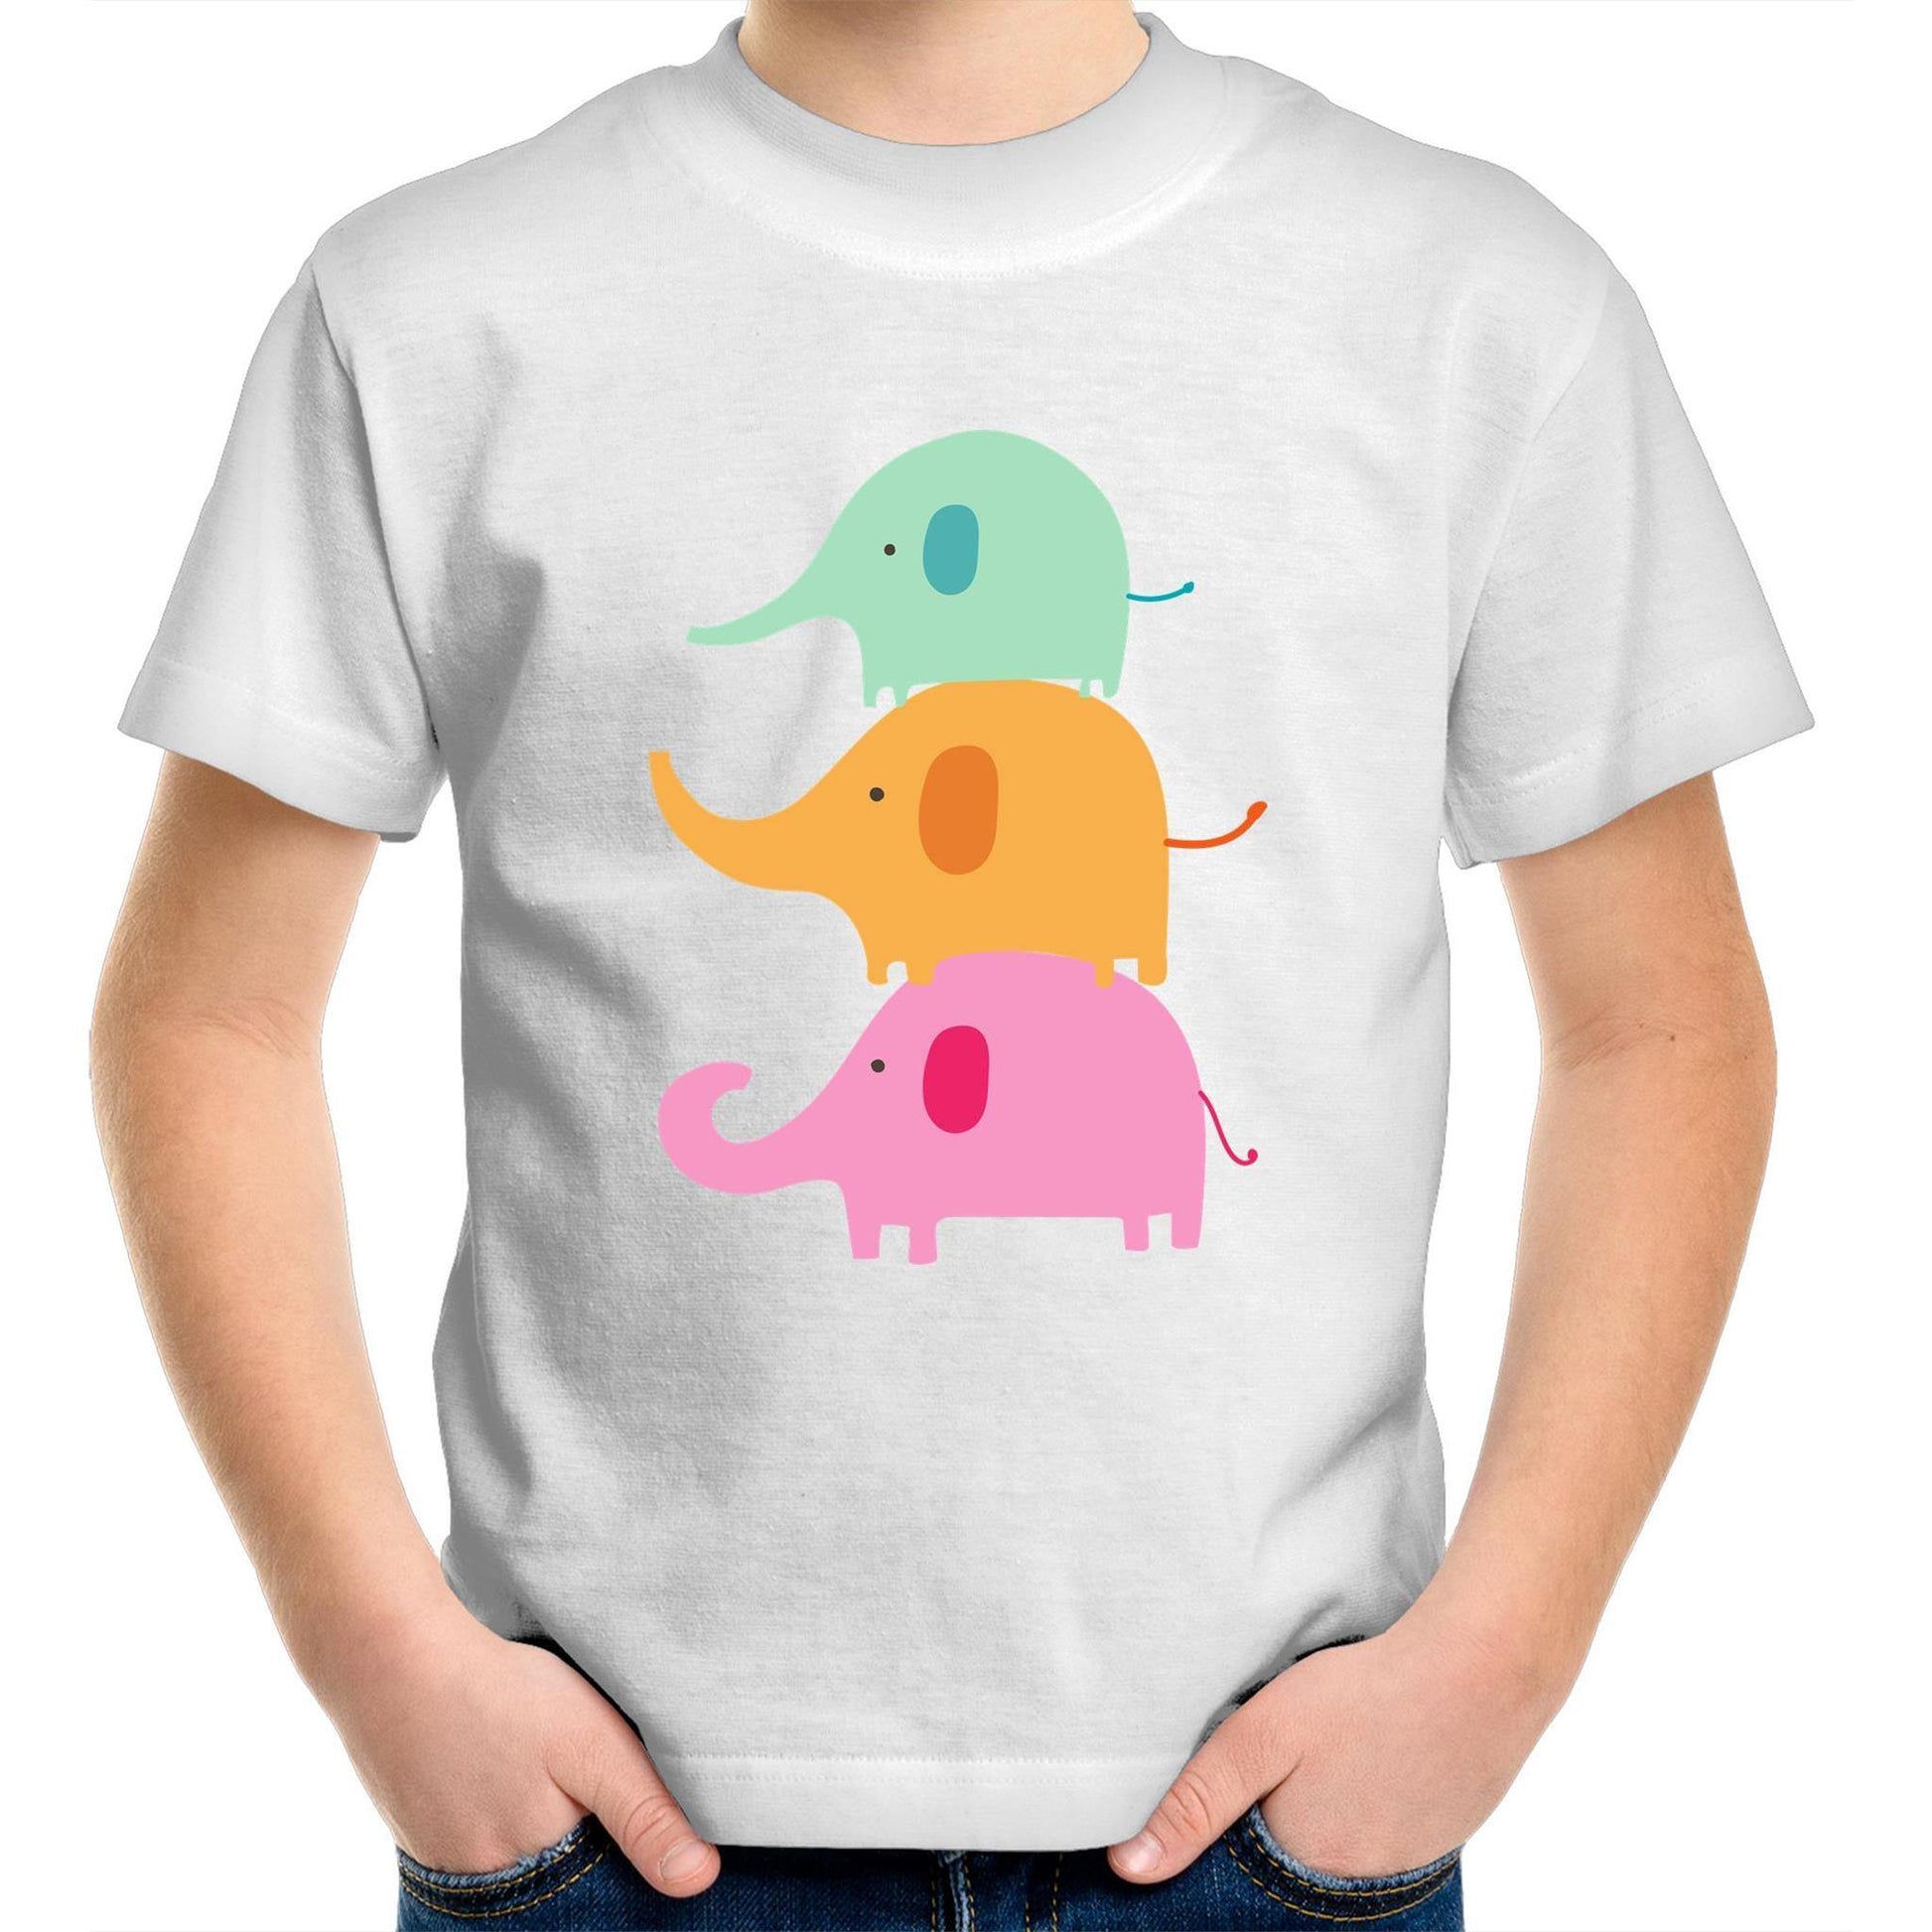 Three Cute Elephants - Kids Youth Crew T-Shirt White Kids Youth T-shirt animal